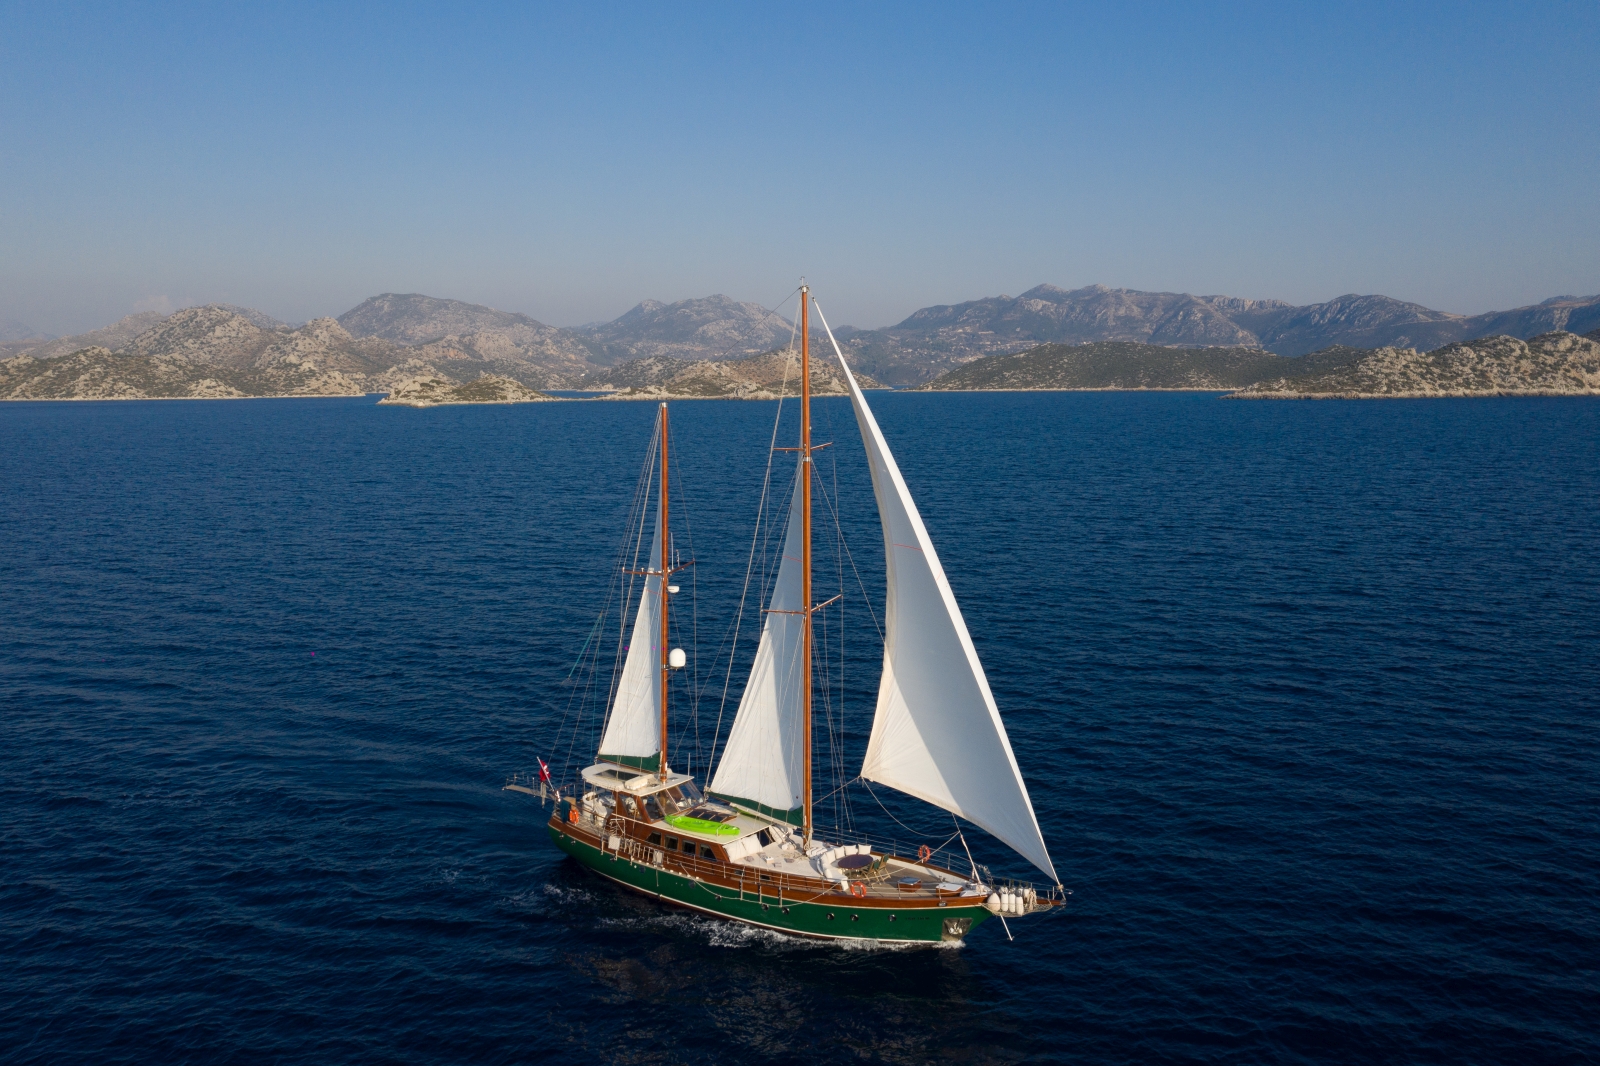 Sailing onboard the luxury gulet Lady Freya in the Mediterranean Sea